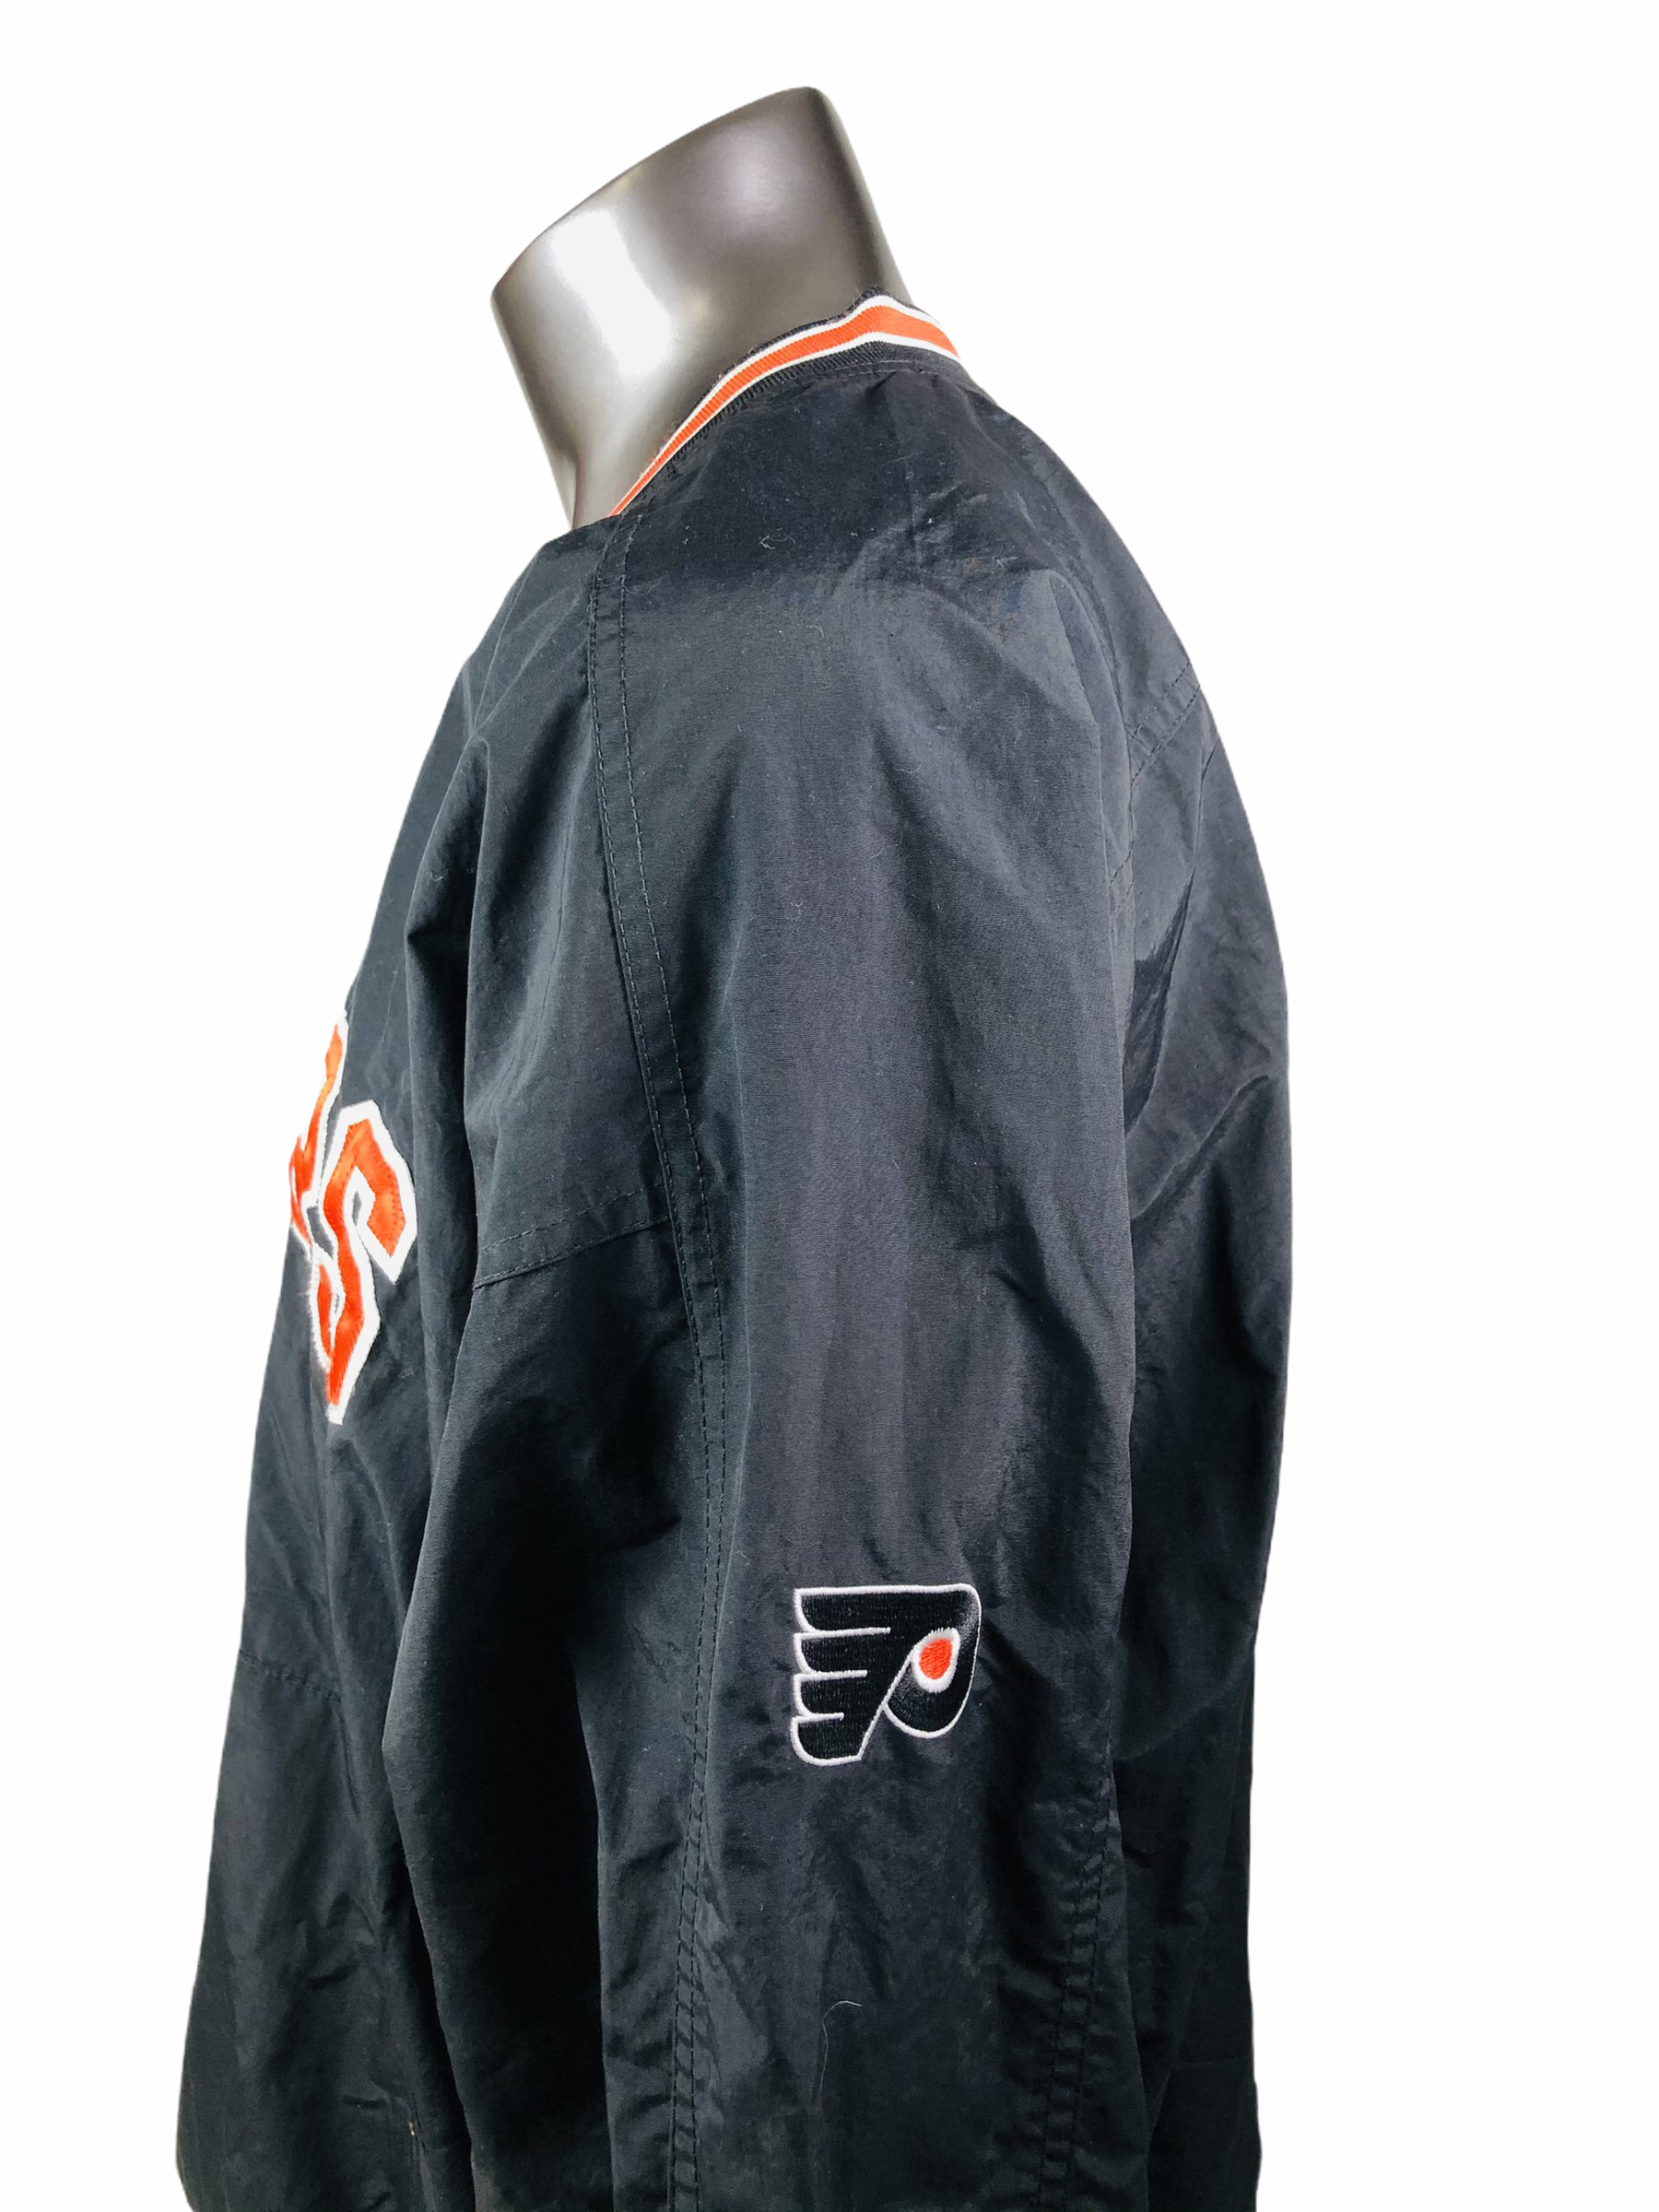 ⭐ Camiseta NHL Philadelphia Flyers talle L/XL⭐ 💲 VENDIDA💲 #casaca # camiseta #buzo #NHL #hockeysobrehielo #philadelphia #Flyers #philly…